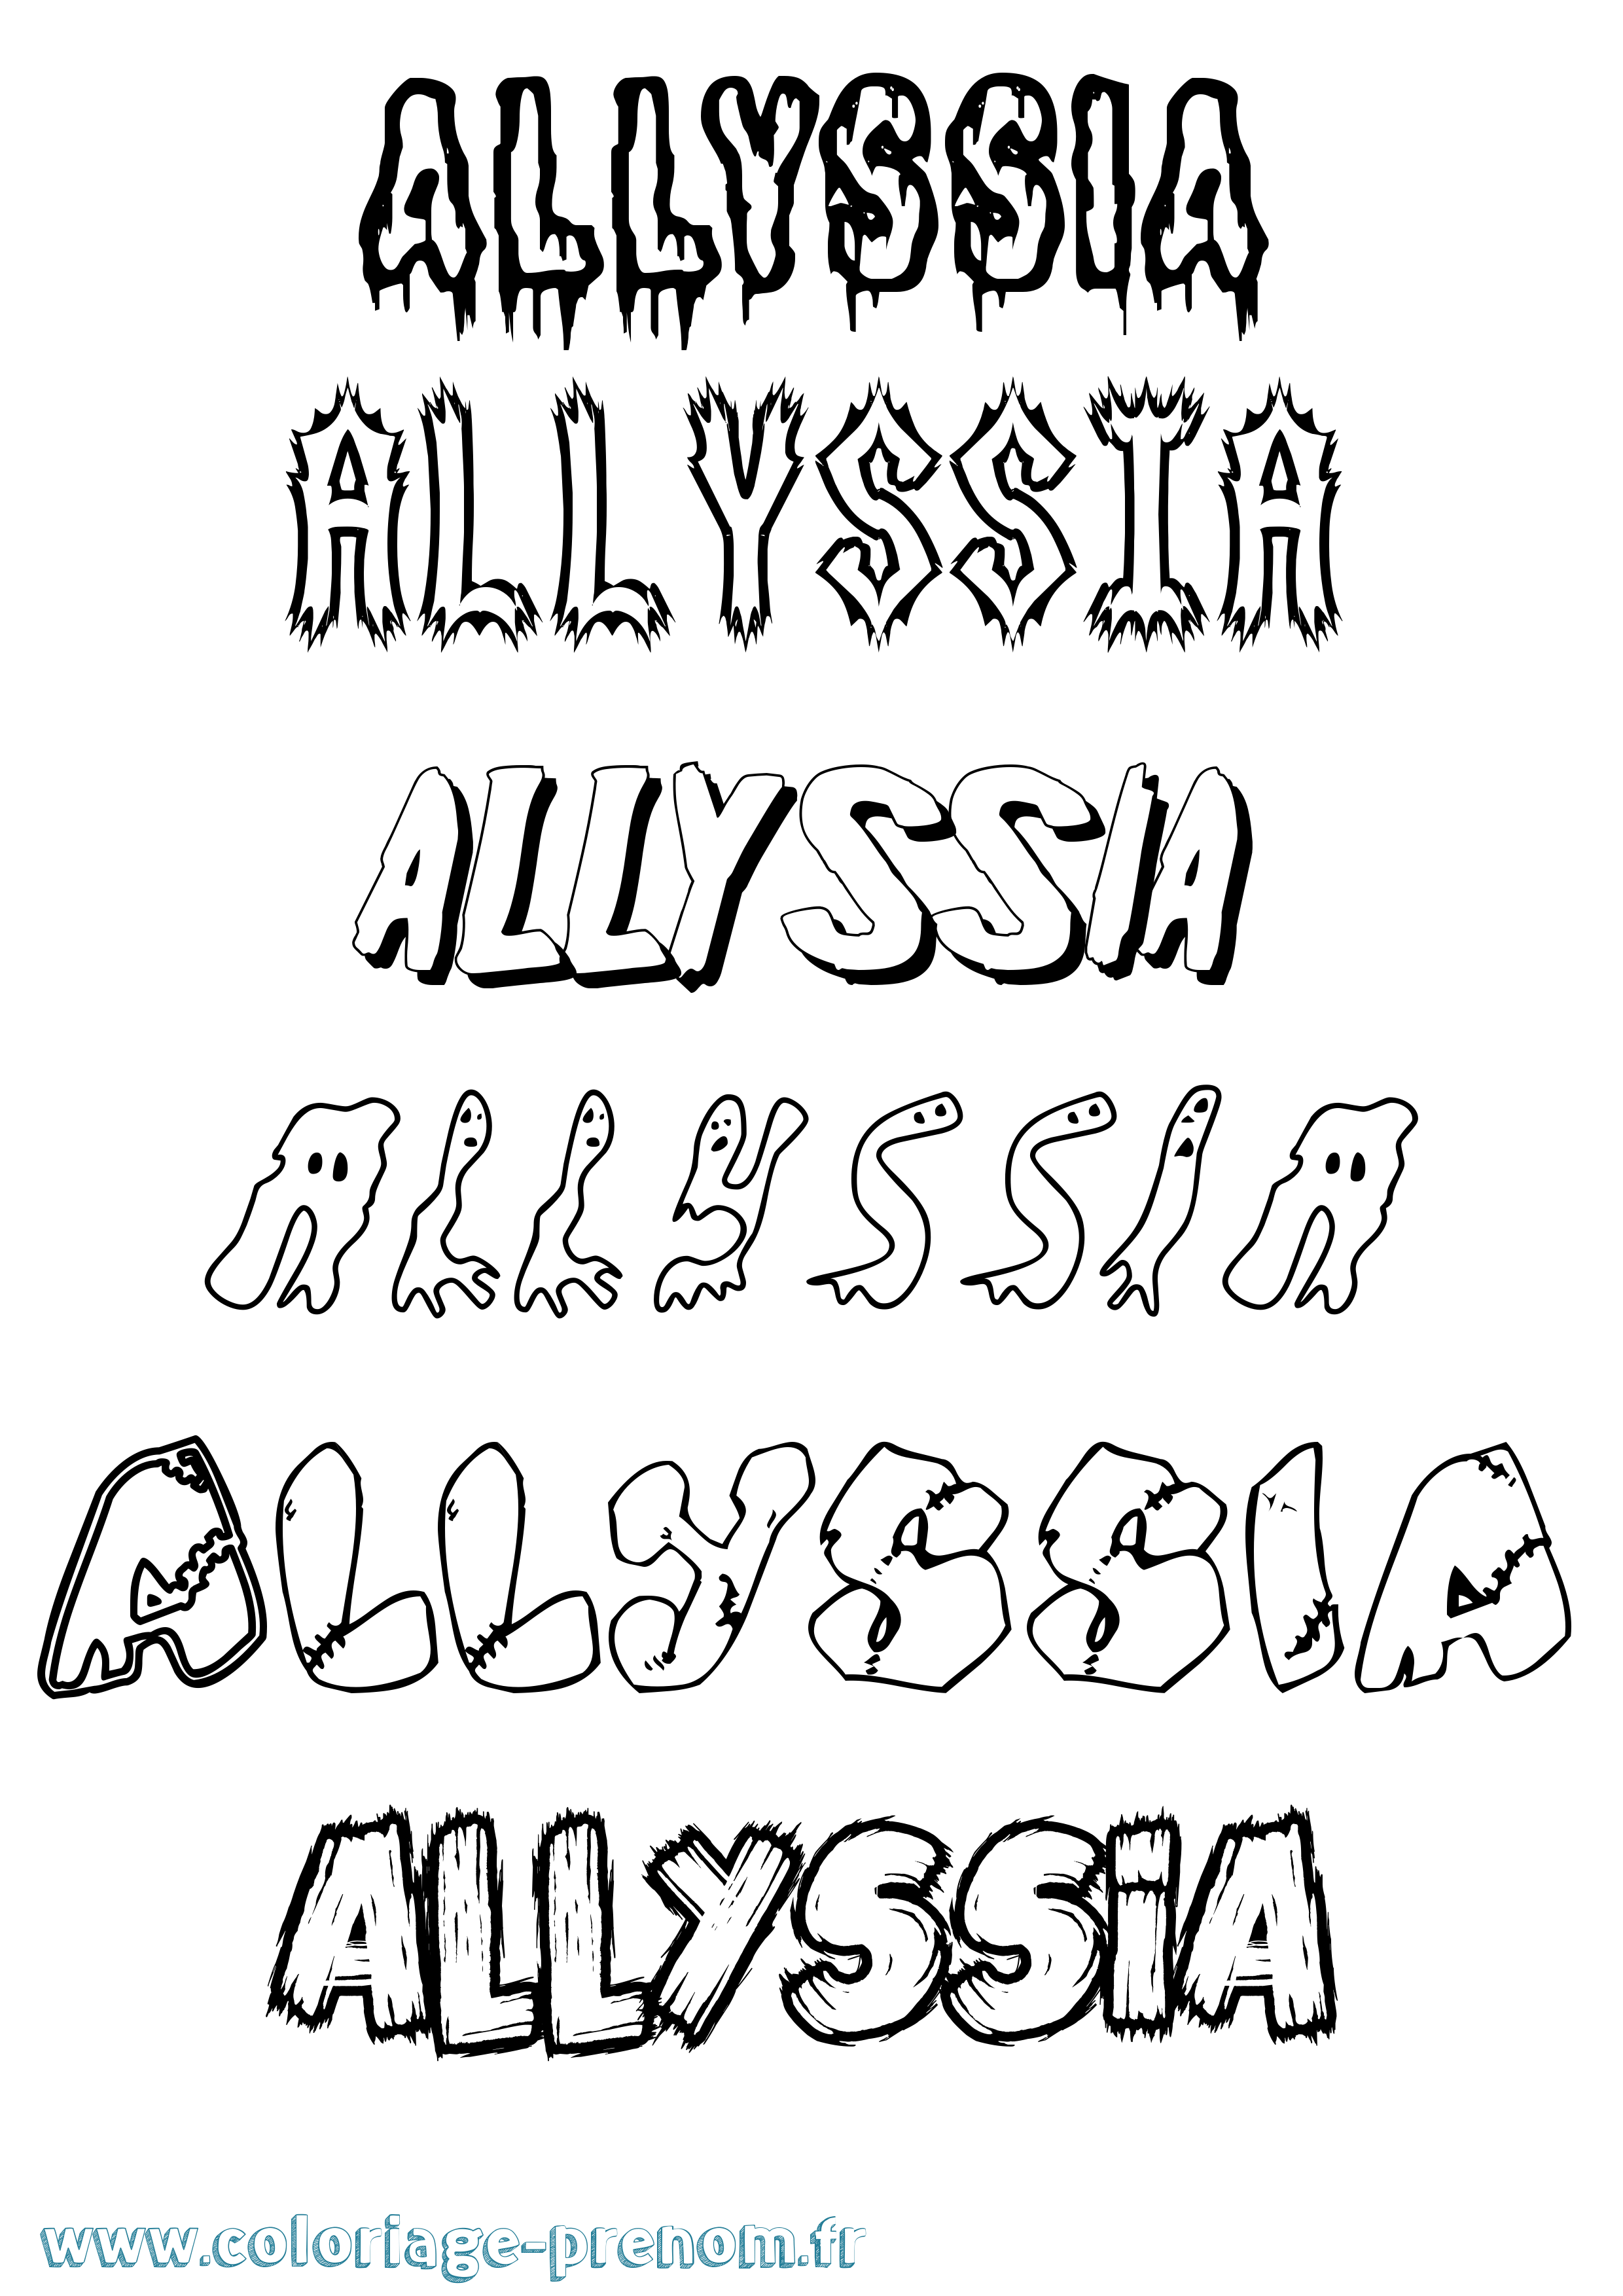 Coloriage prénom Allyssia Frisson